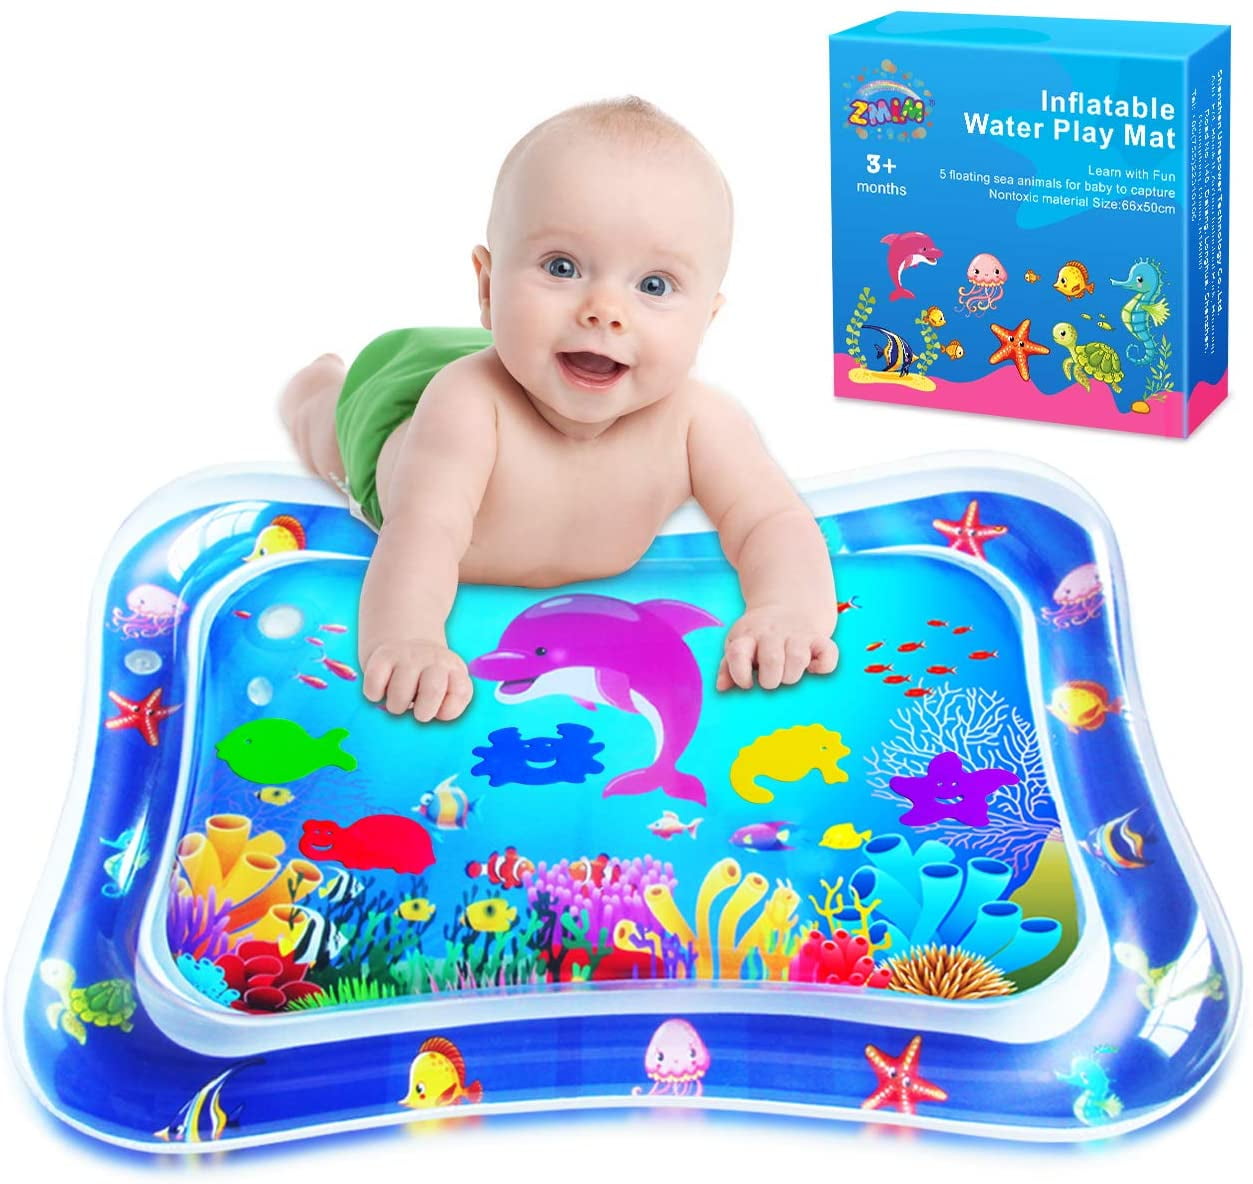 Inflatable Water Play Mat Baby Infant Kids Mattress Splash Playmat Tummy Time UK 